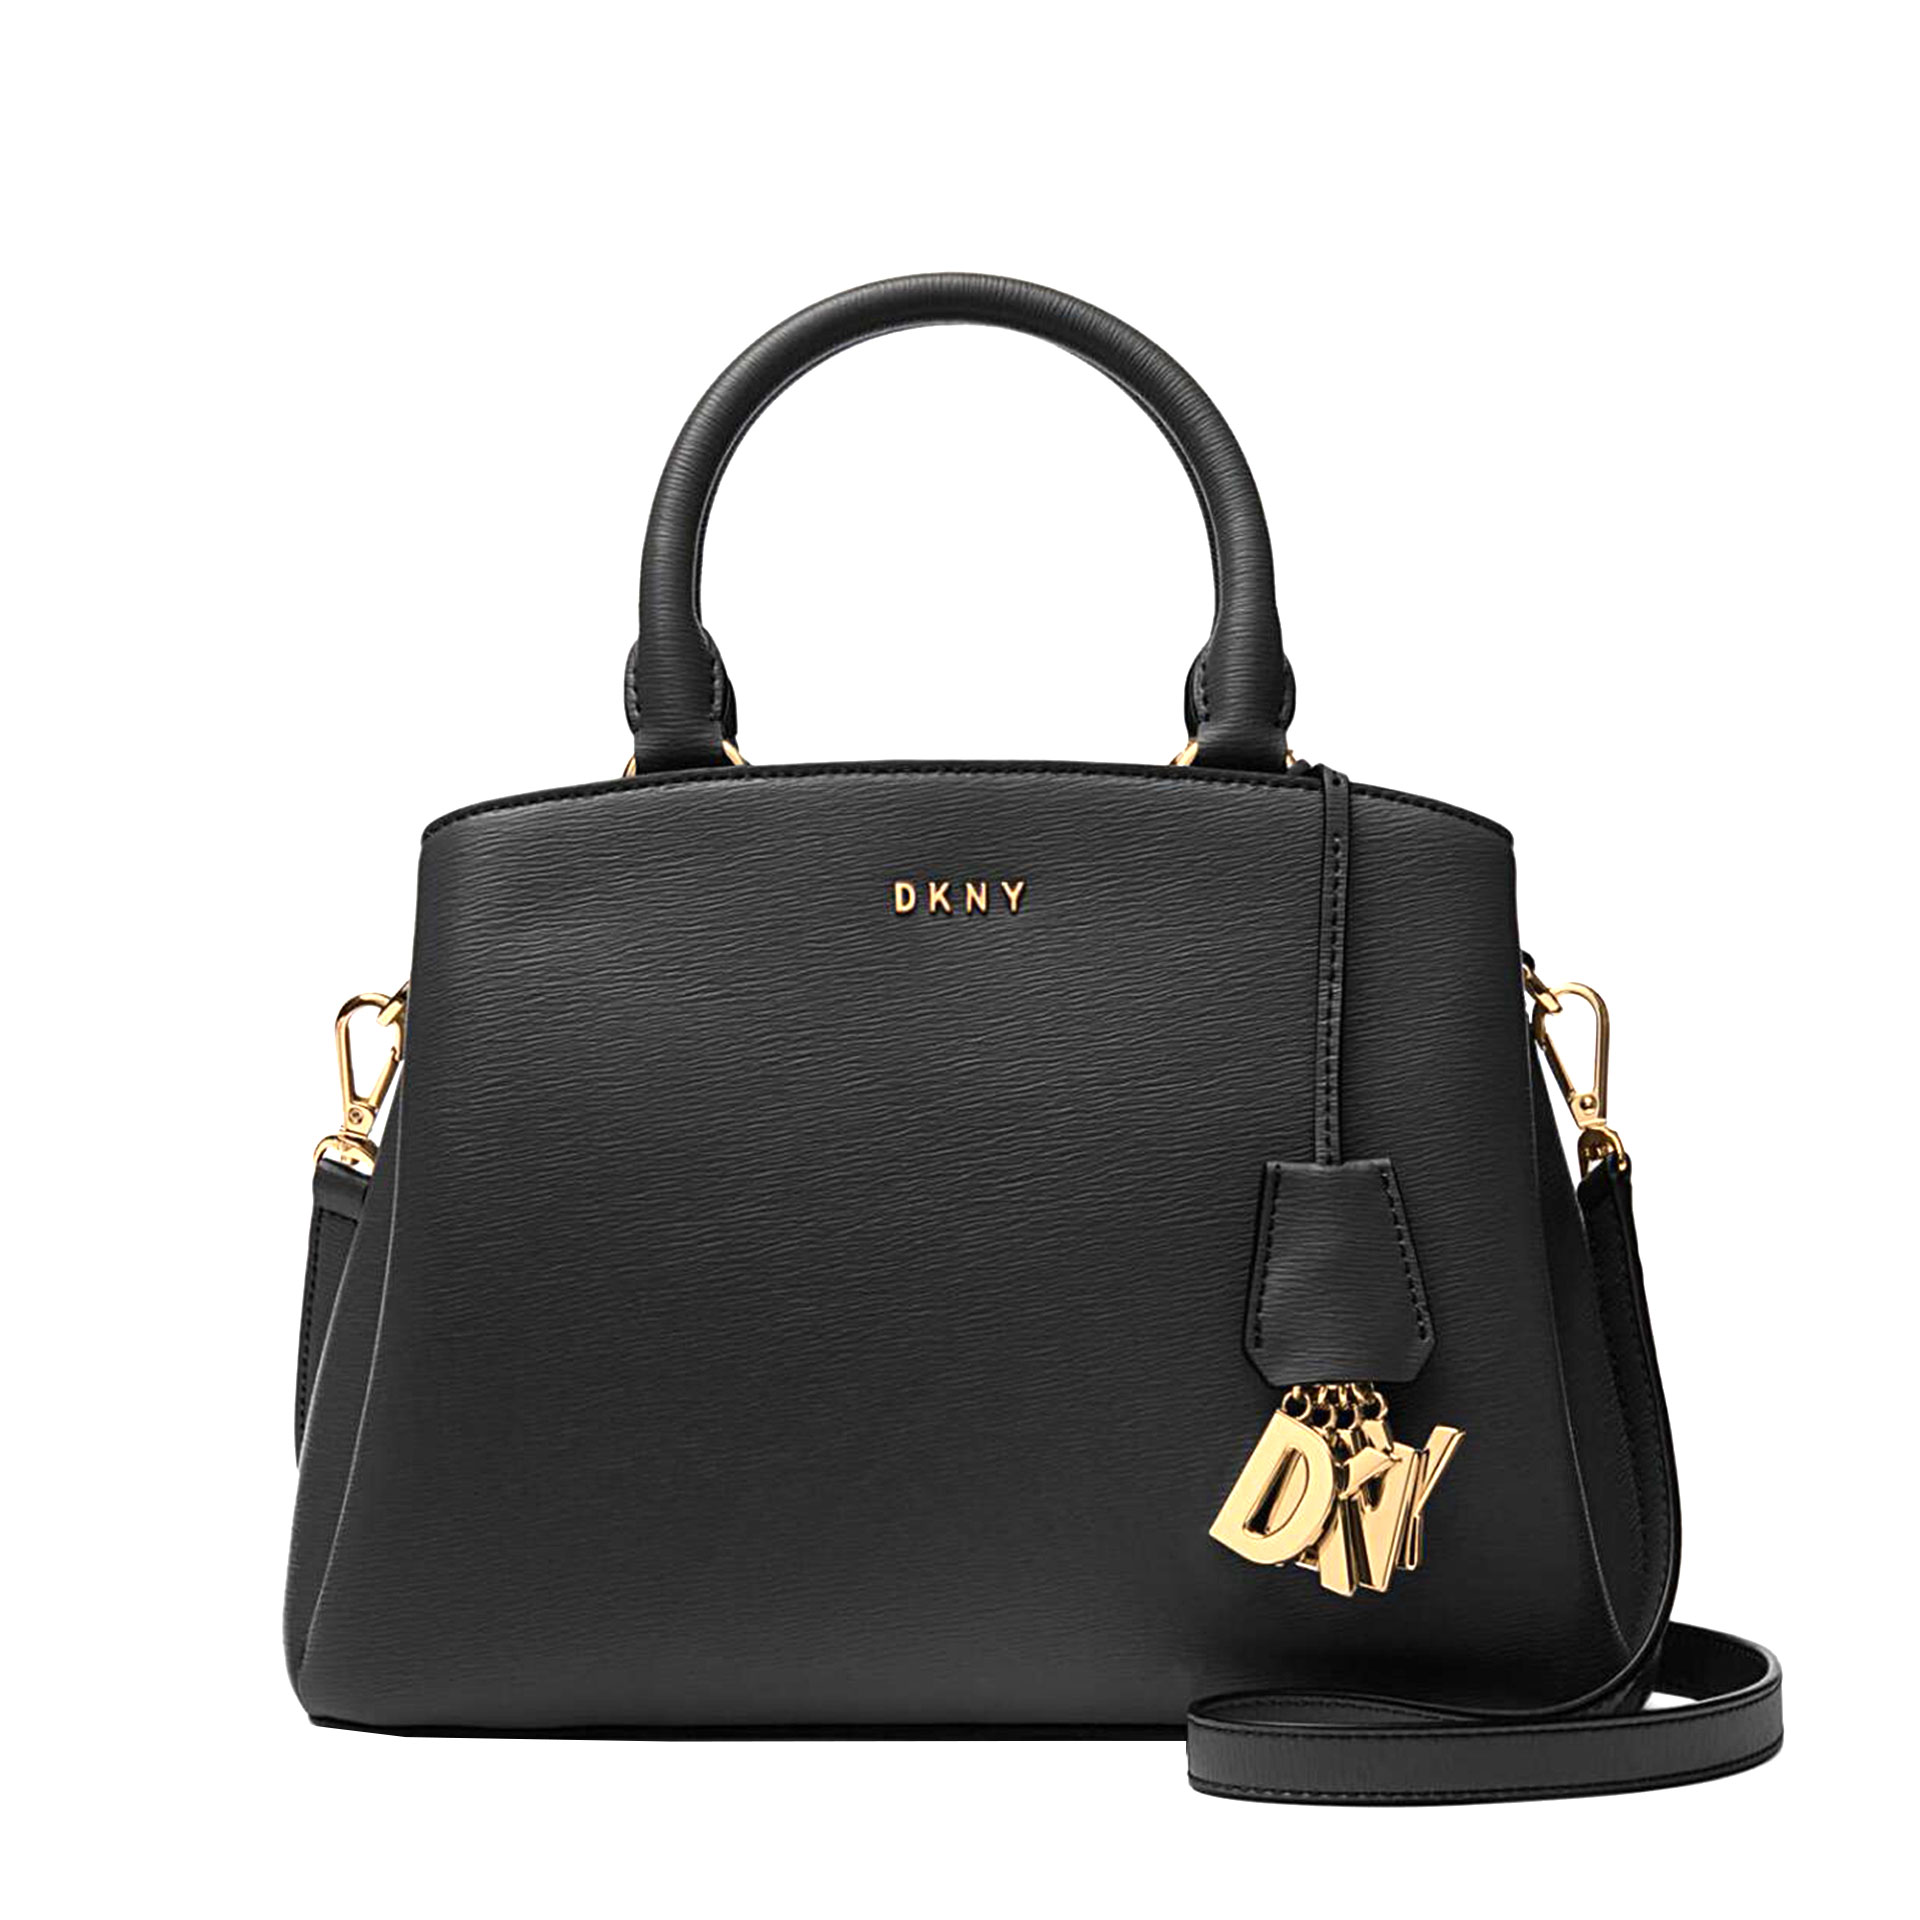 DKNY Paige Handtasche black gold